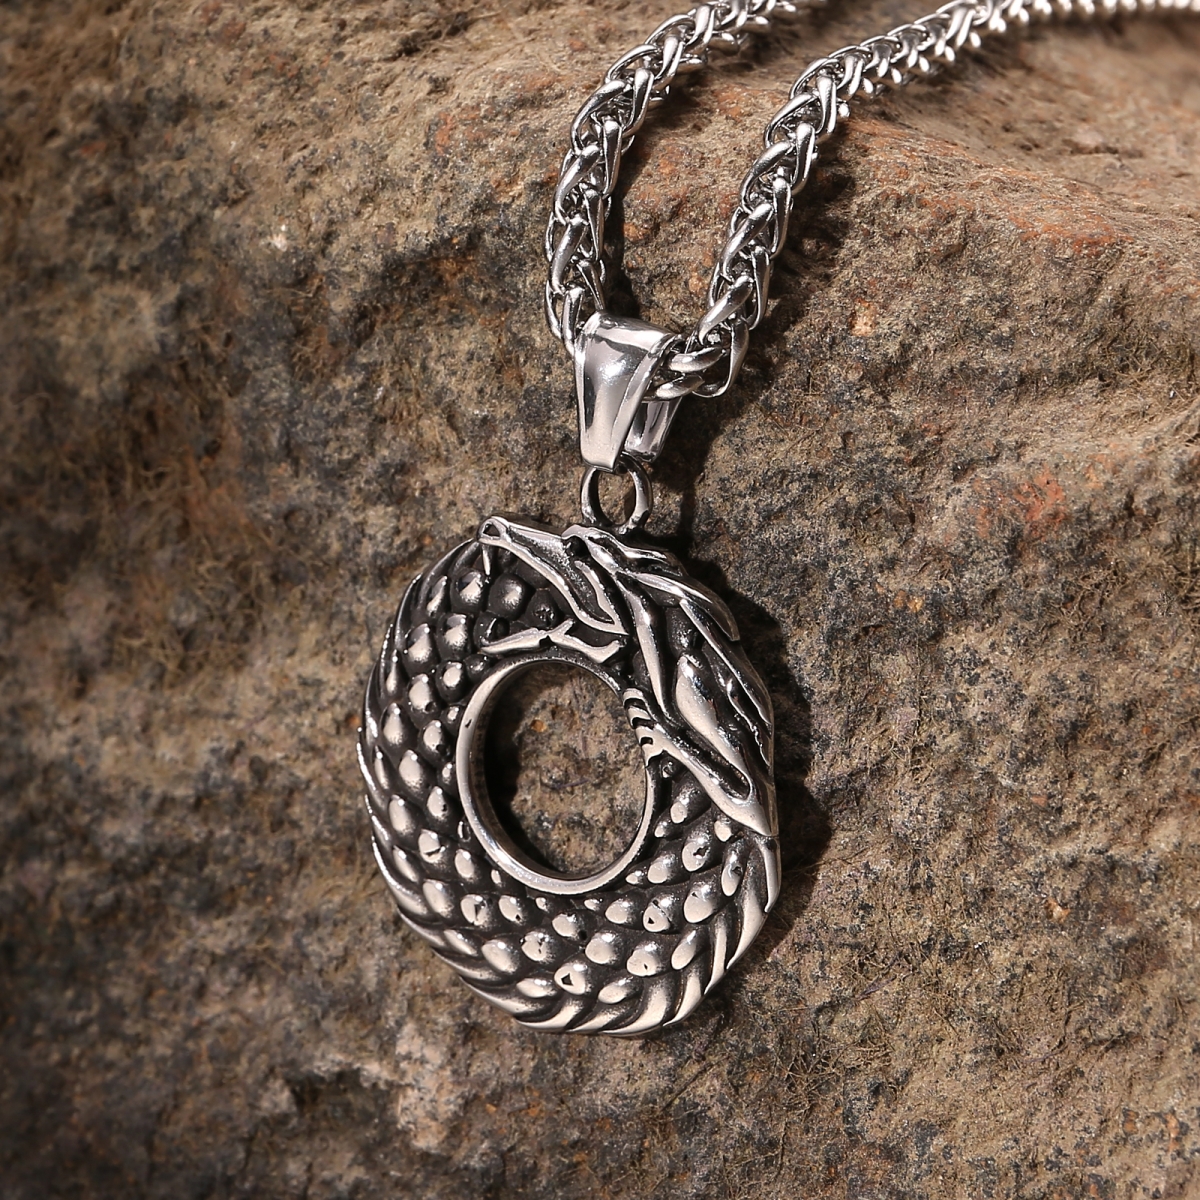 World Serpent Jormungandr Snake Necklace US$2.9/PC-NORSECOLLECTION- Viking Jewelry,Viking Necklace,Viking Bracelet,Viking Rings,Viking Mugs,Viking Accessories,Viking Crafts